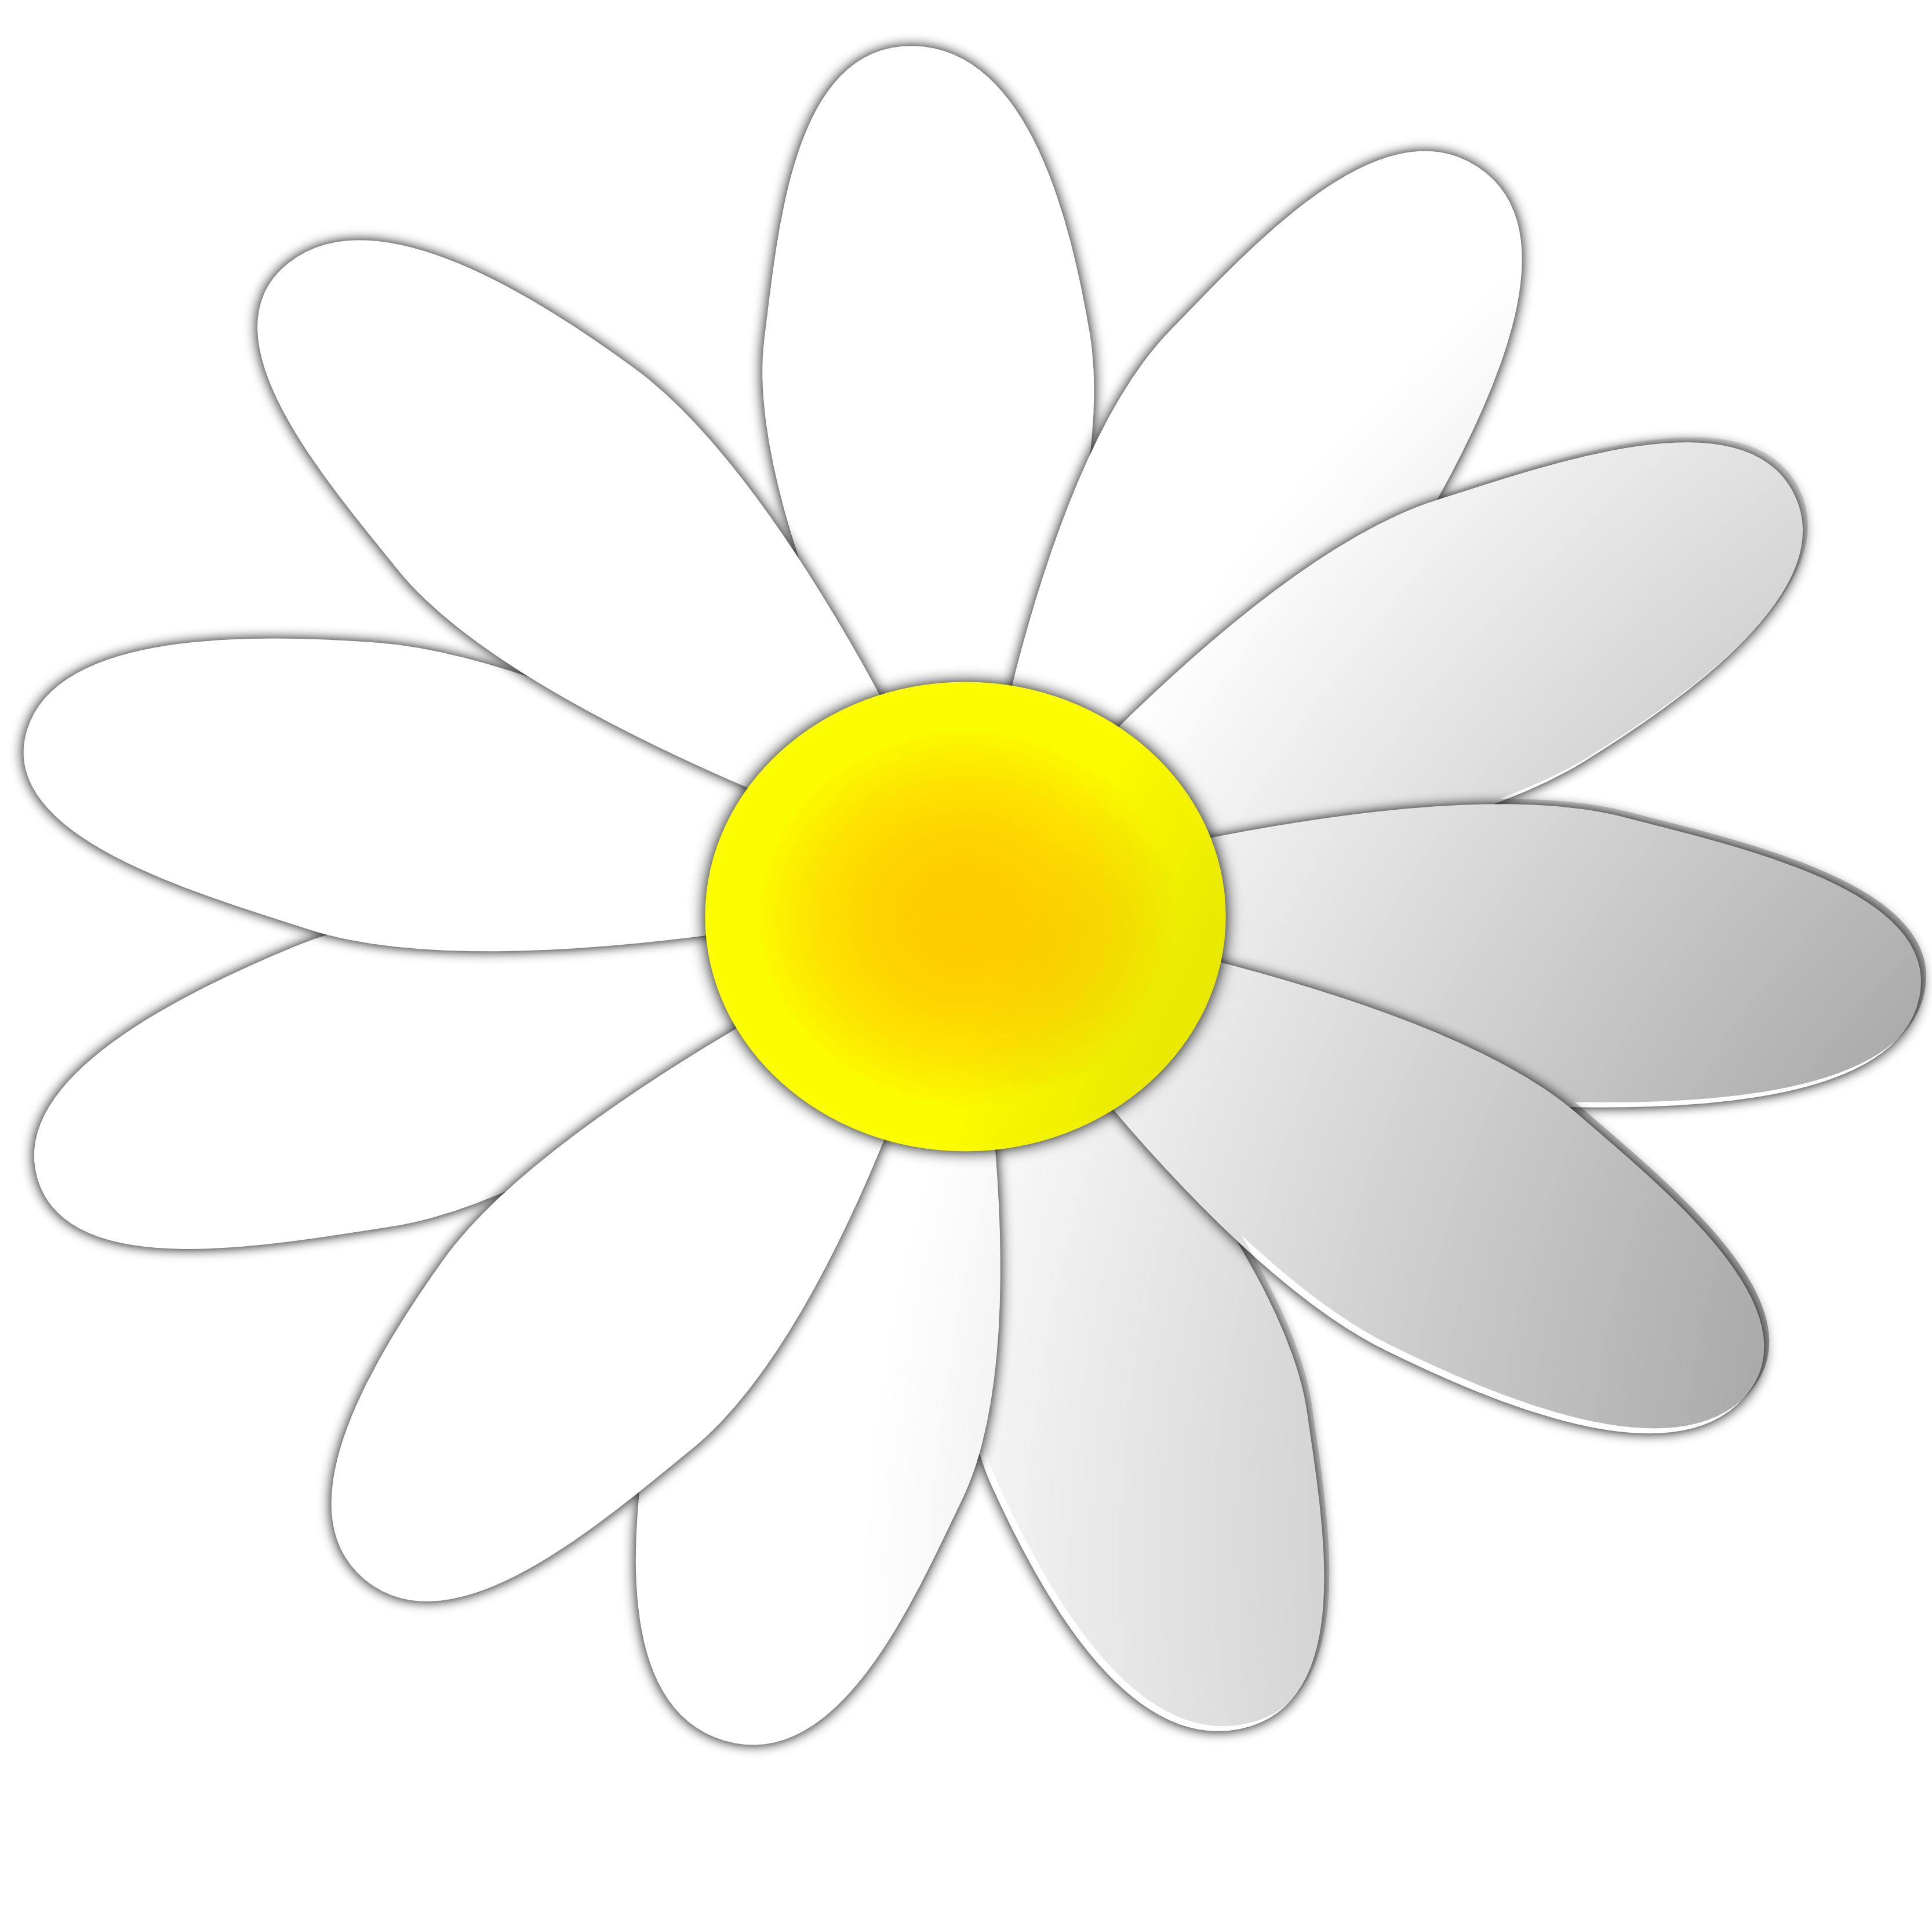 Daisy flower clip art clipart clipartix